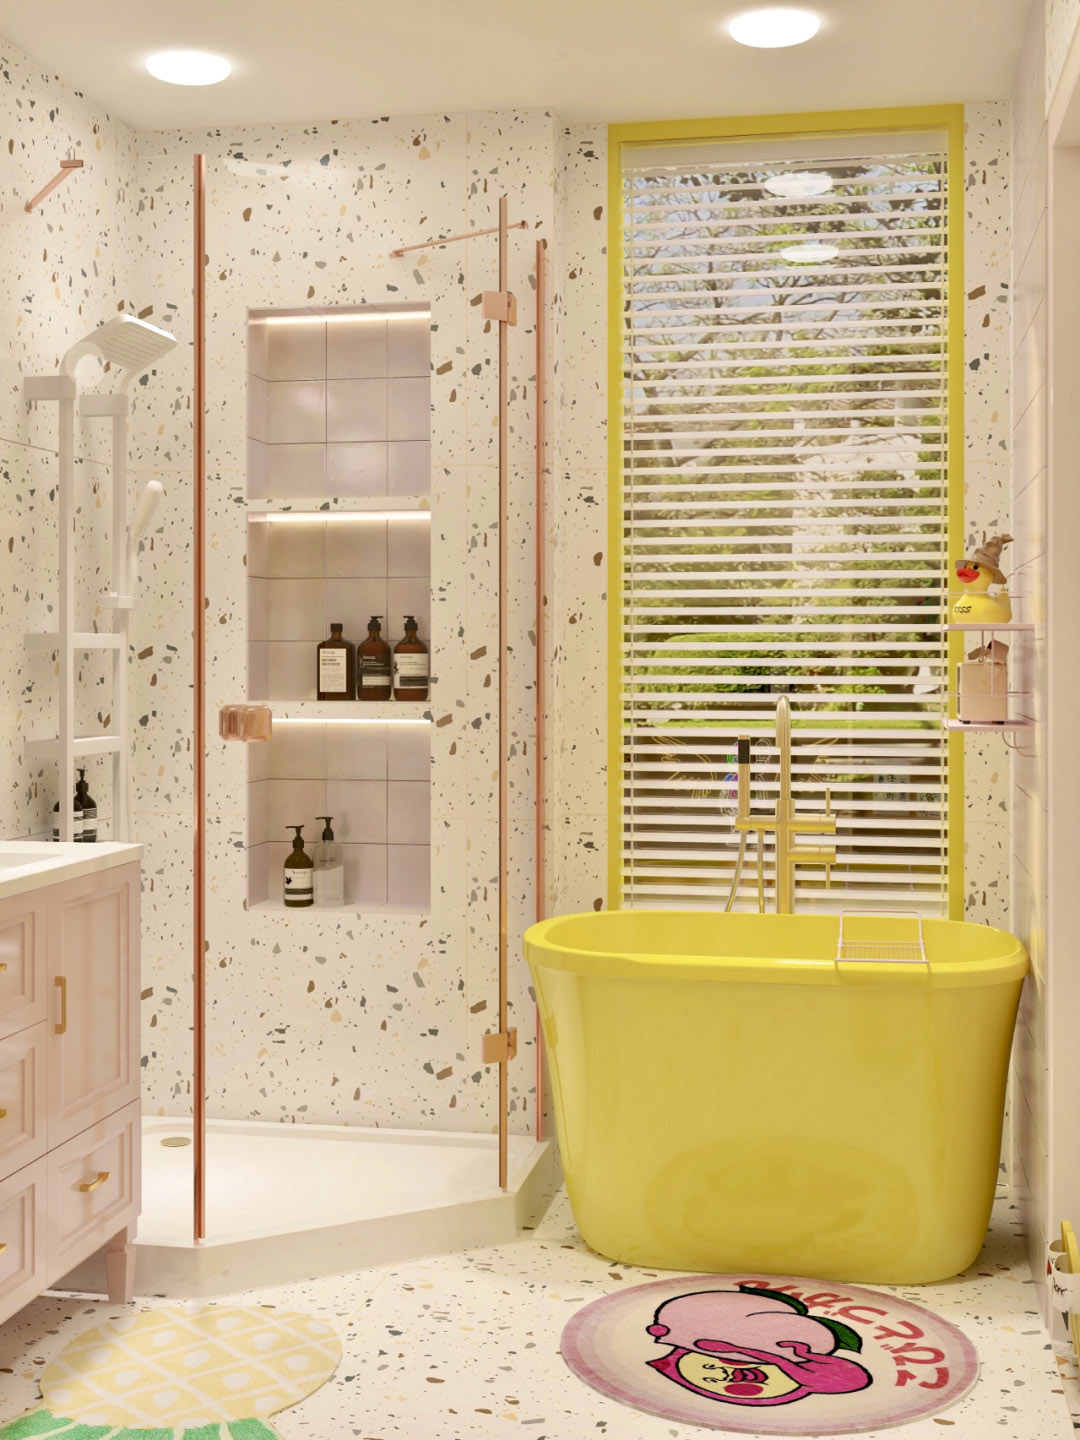 20 Kids Bathroom Decor Ideas To Bath More Fun | HomeMydesign